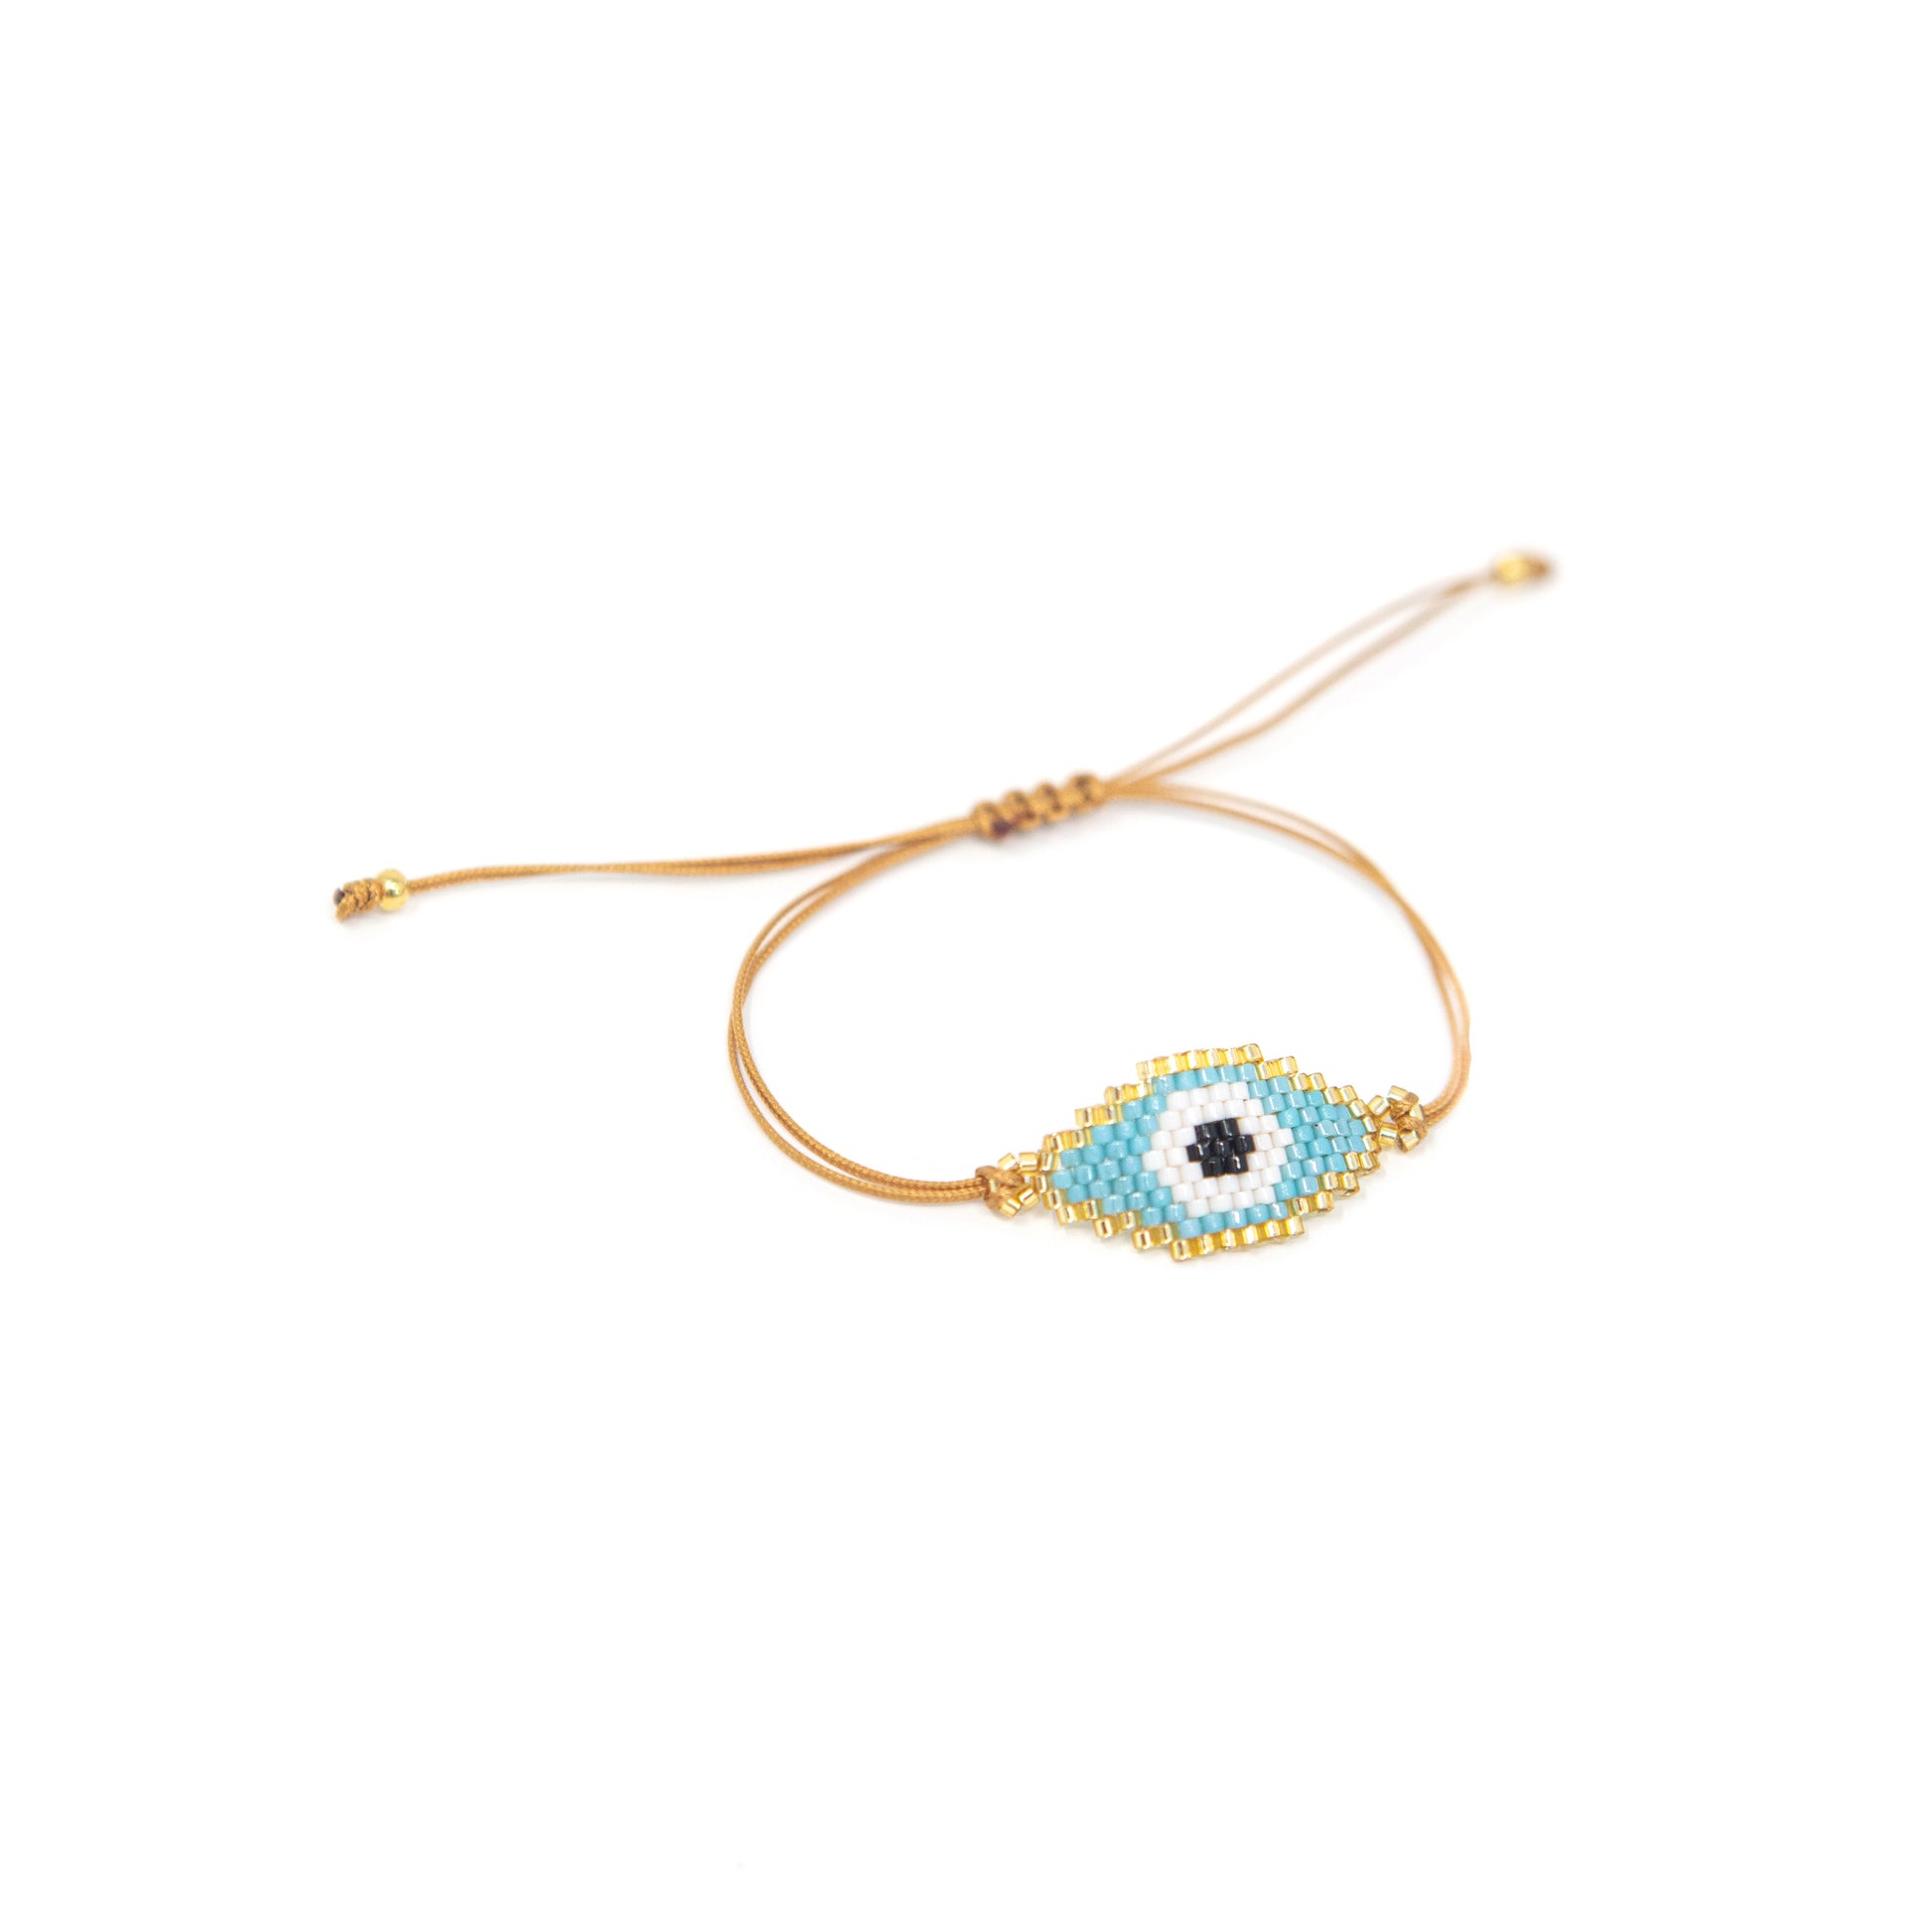 Beaded Evil Eye Adjustable Cord Bracelet JEWELRY The Sis Kiss White Eye on Turquoise Background